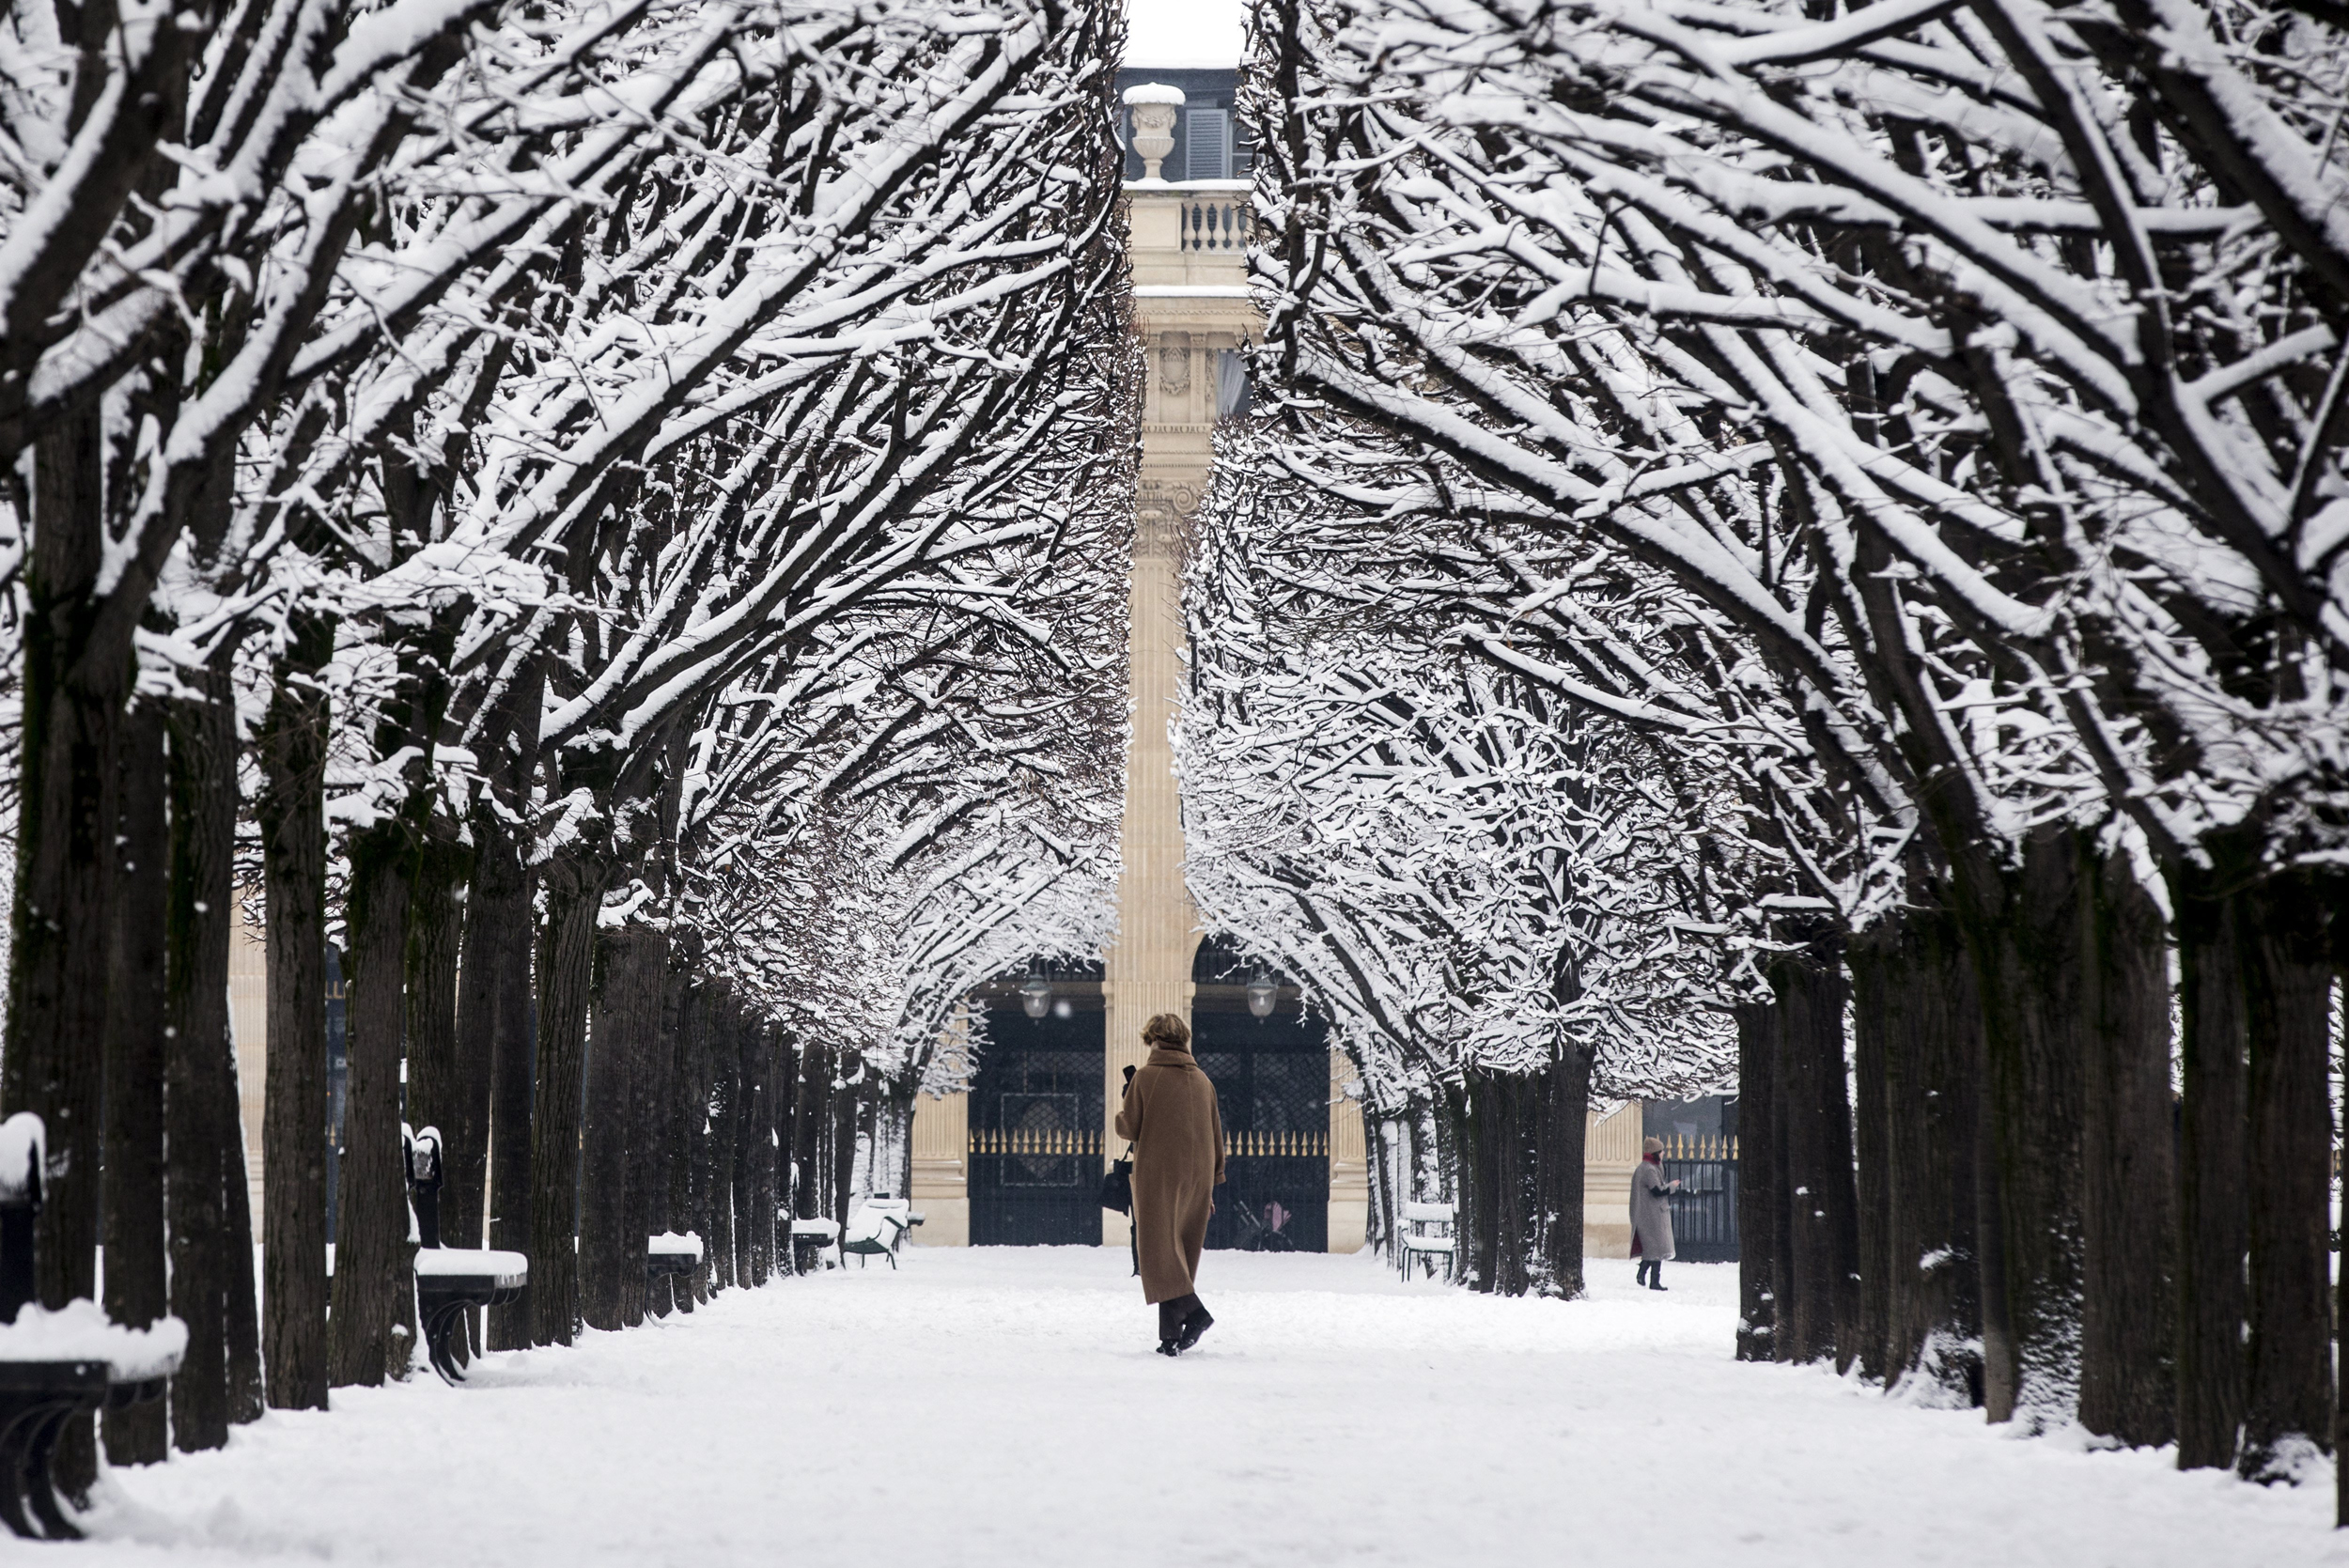 Rare snow brings Paris to scenic standstill